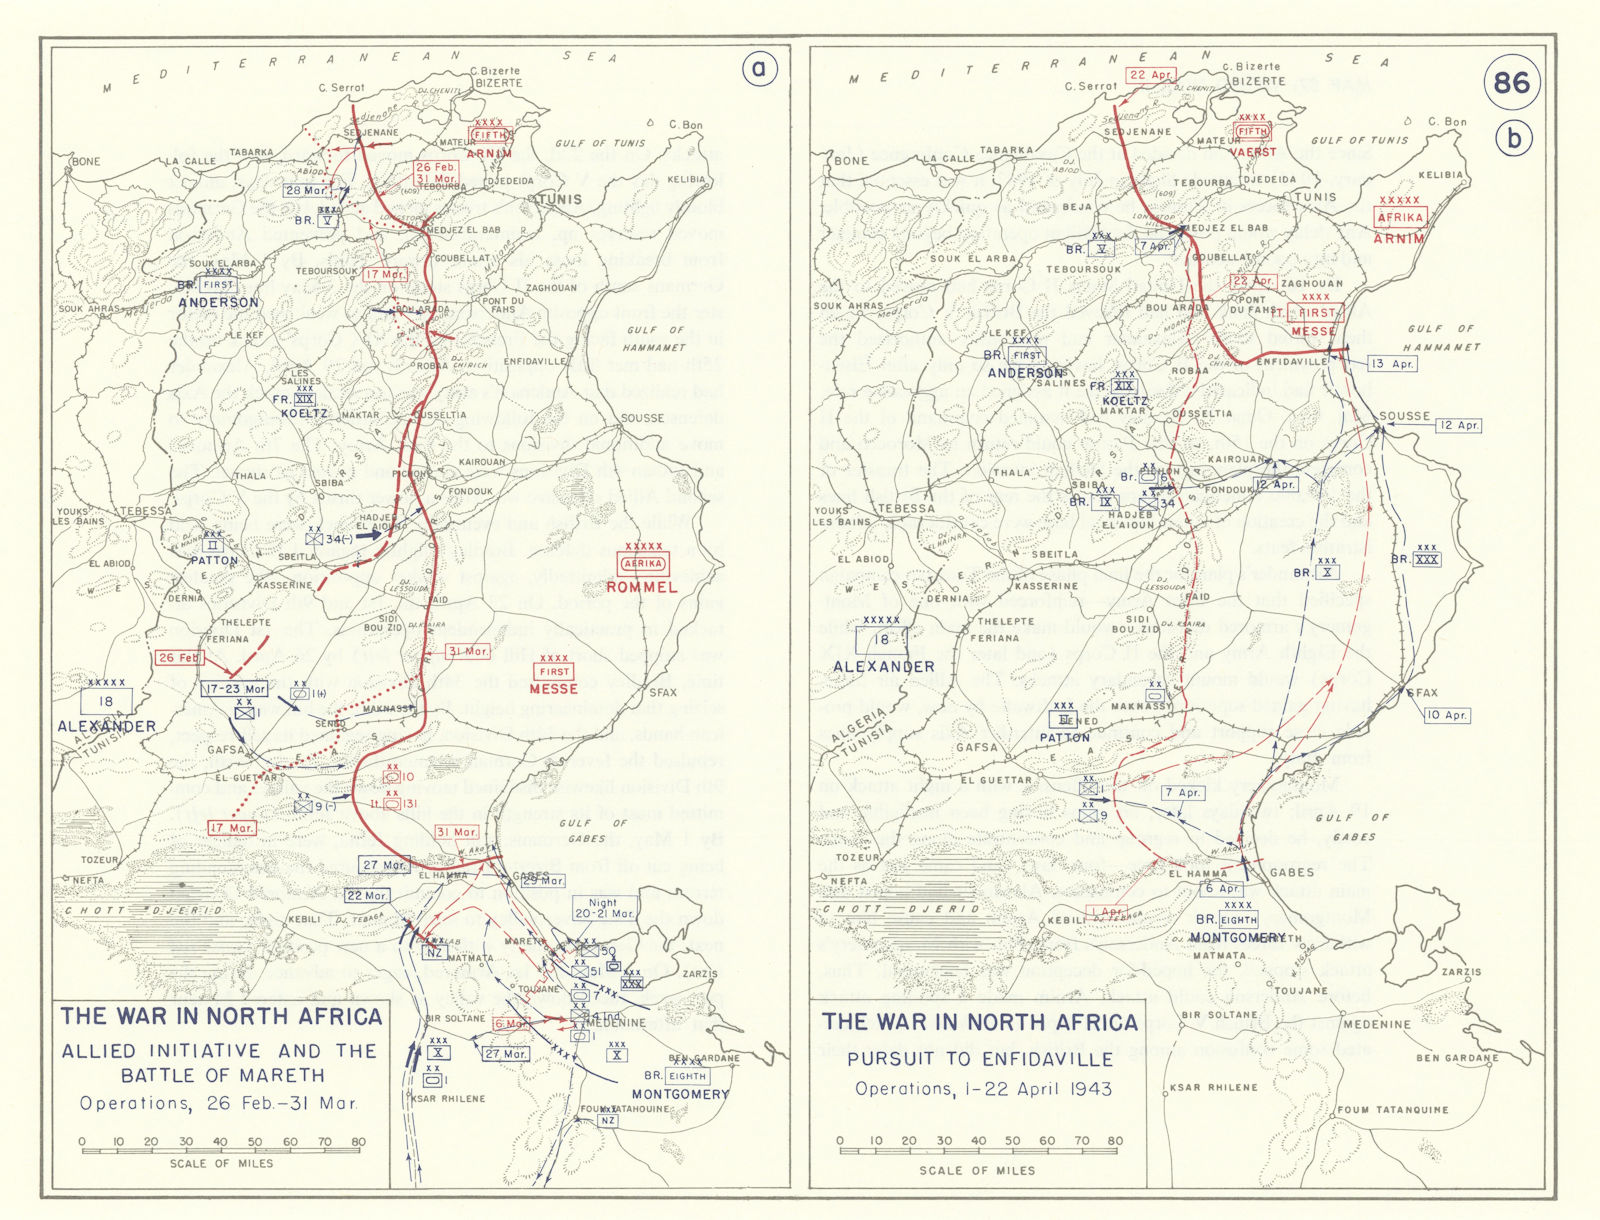 World War 2. Tunisia Feb-April 1943. Battle Mareth. Pursuit Enfidaville 1959 map